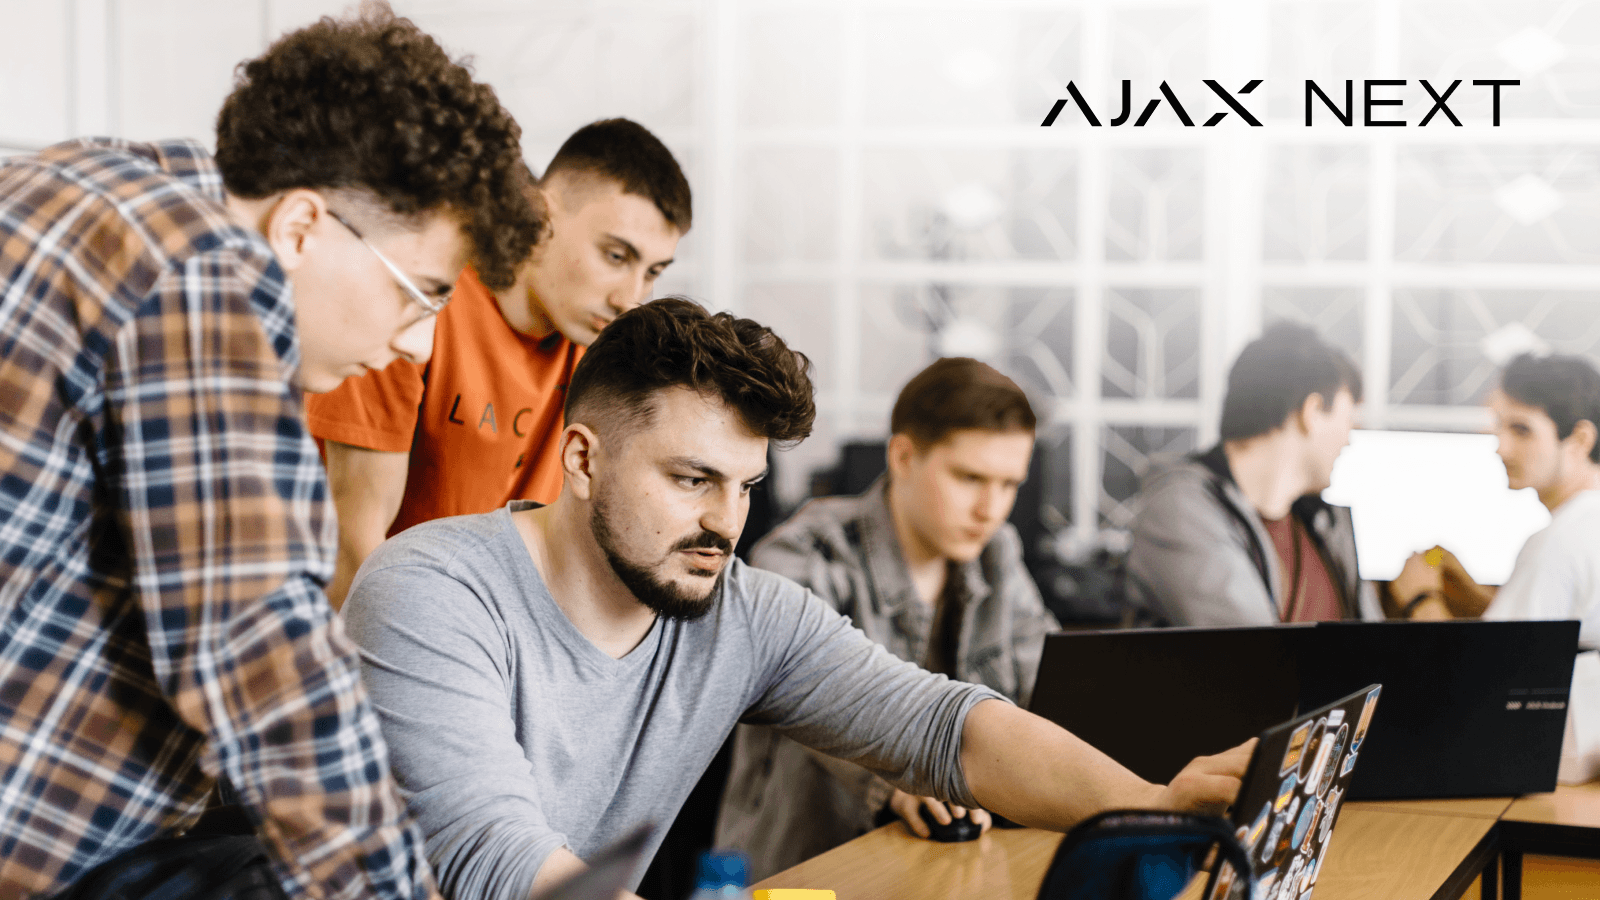 Ajax Systems запускает масштабную образовательную инициативу  "Ajax Next"